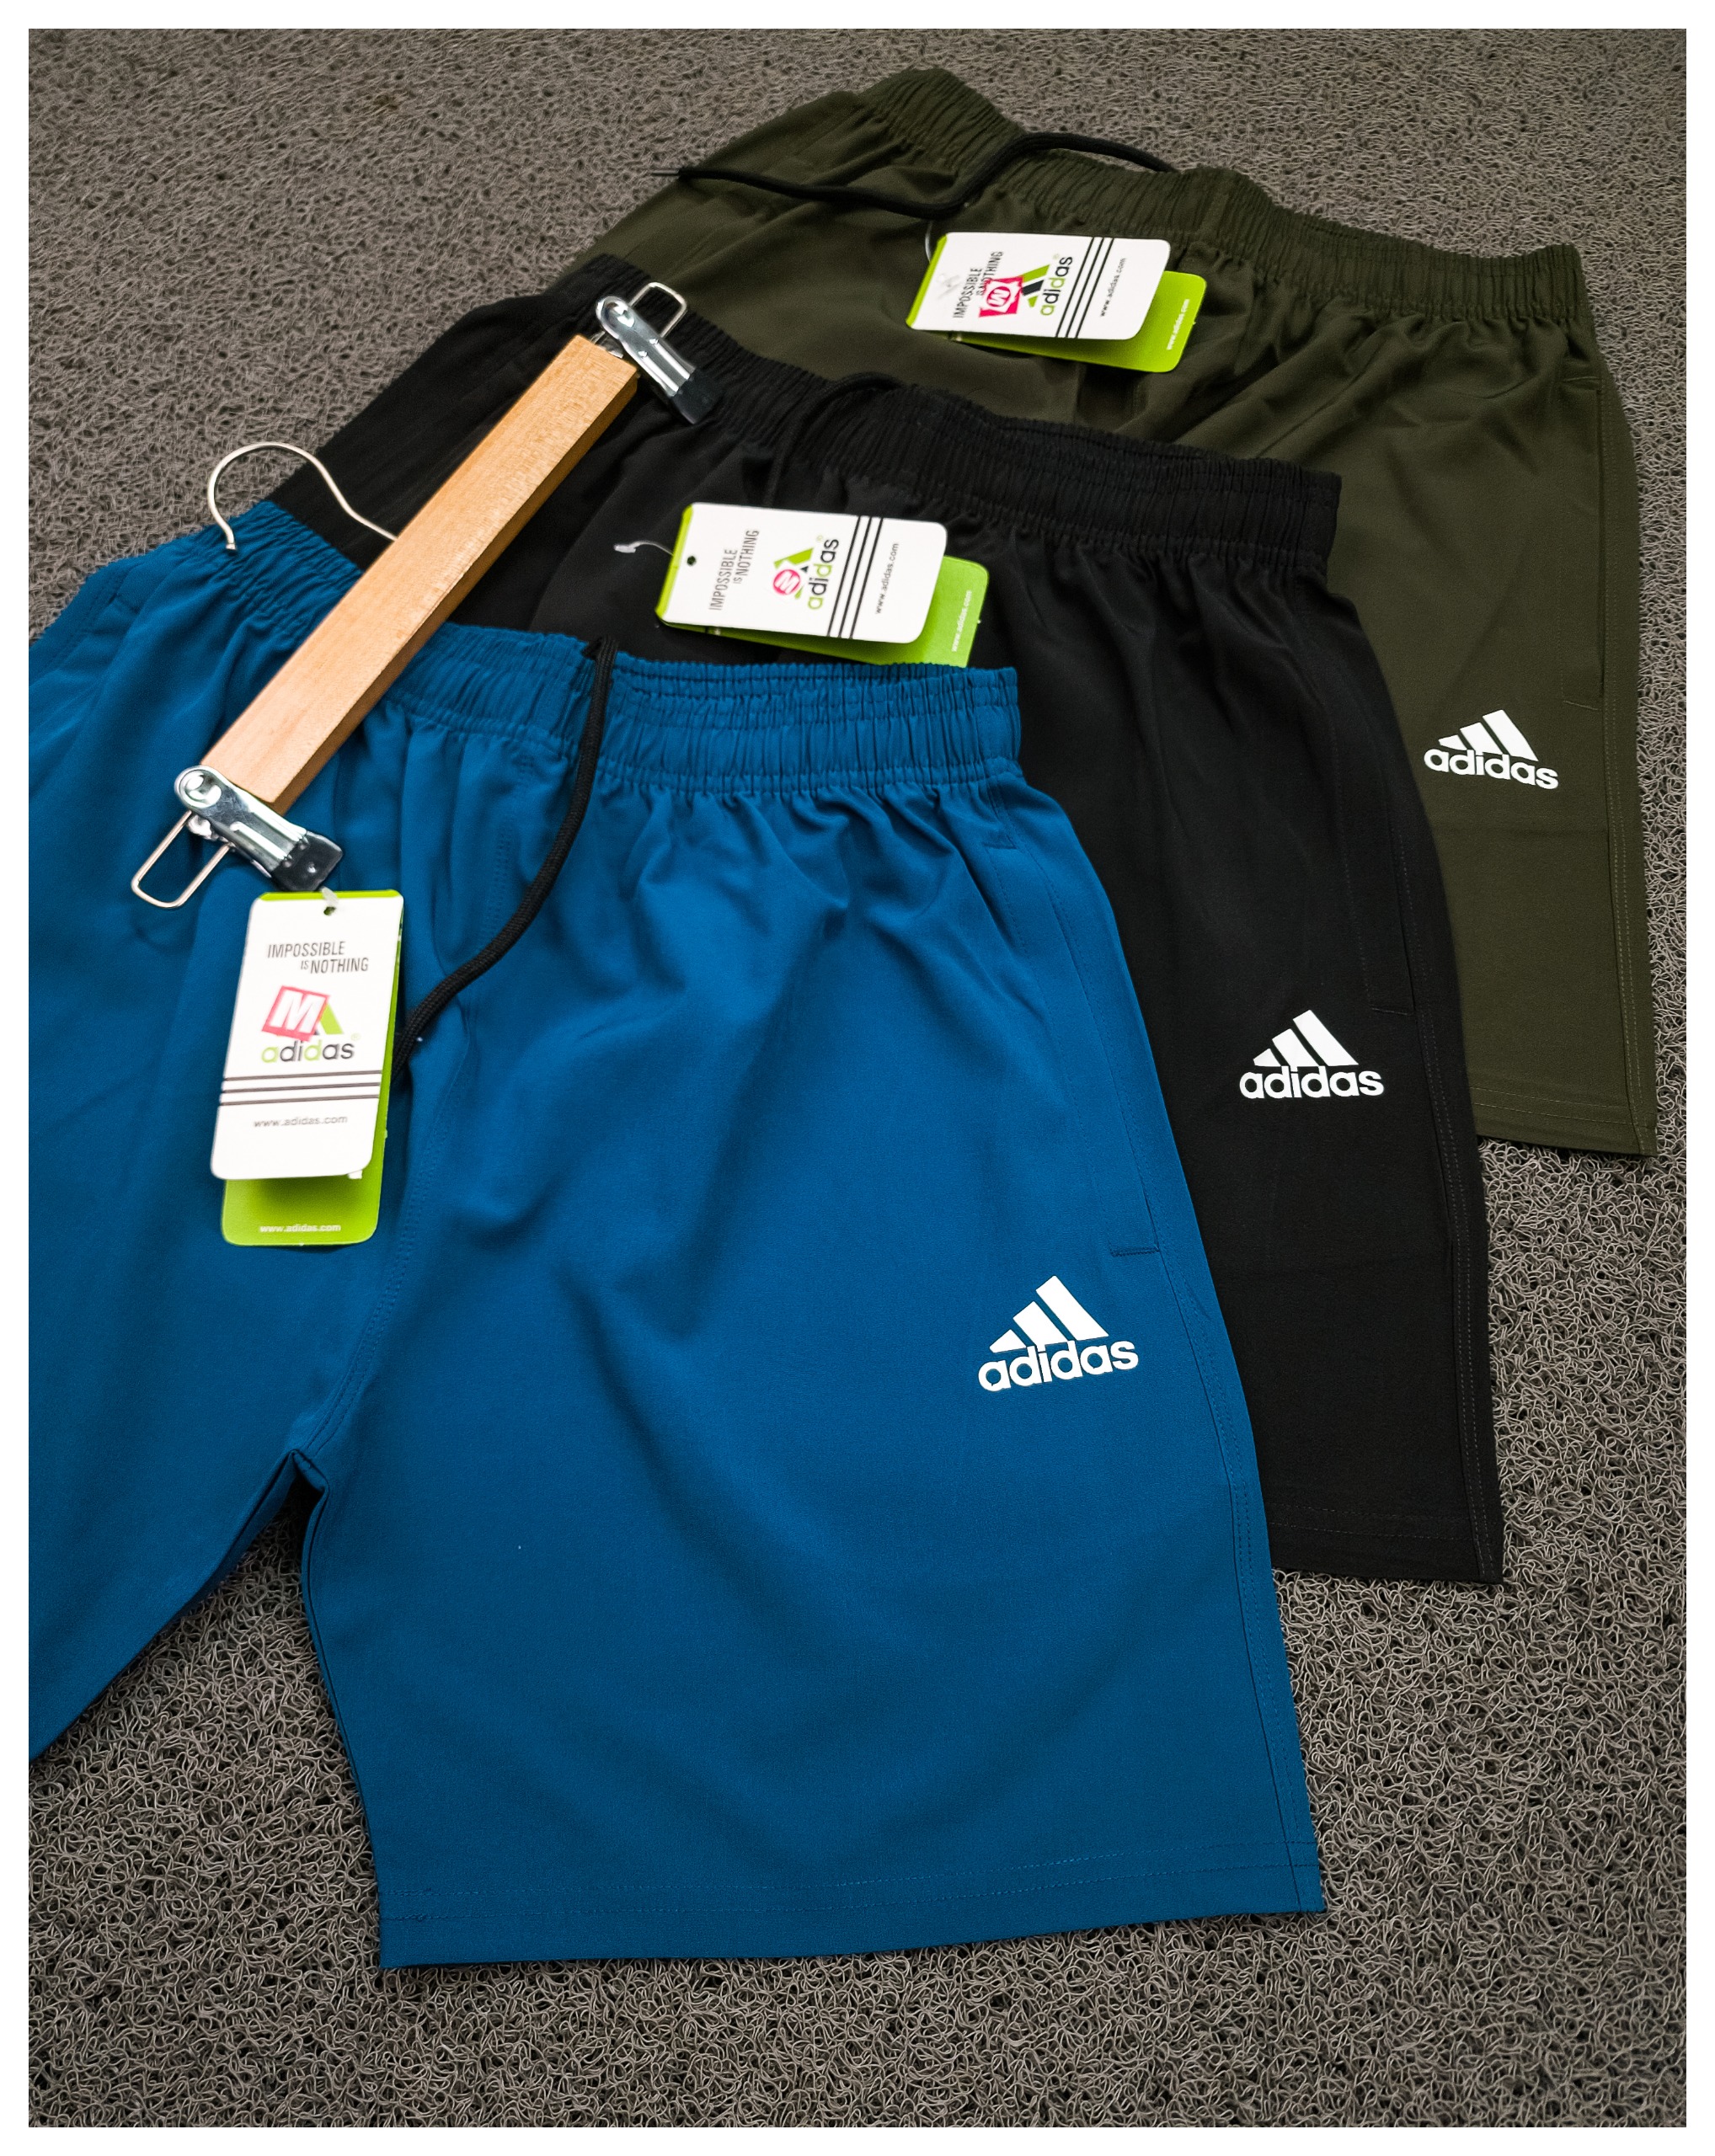 AD7501-Set Of 4 Pcs@170/Pc- Sports NS Lycra Fabric Shorts-AD7501-AN13-S01-NVB - M-1, L-1, XL-1, XXL-1, Navy Blue